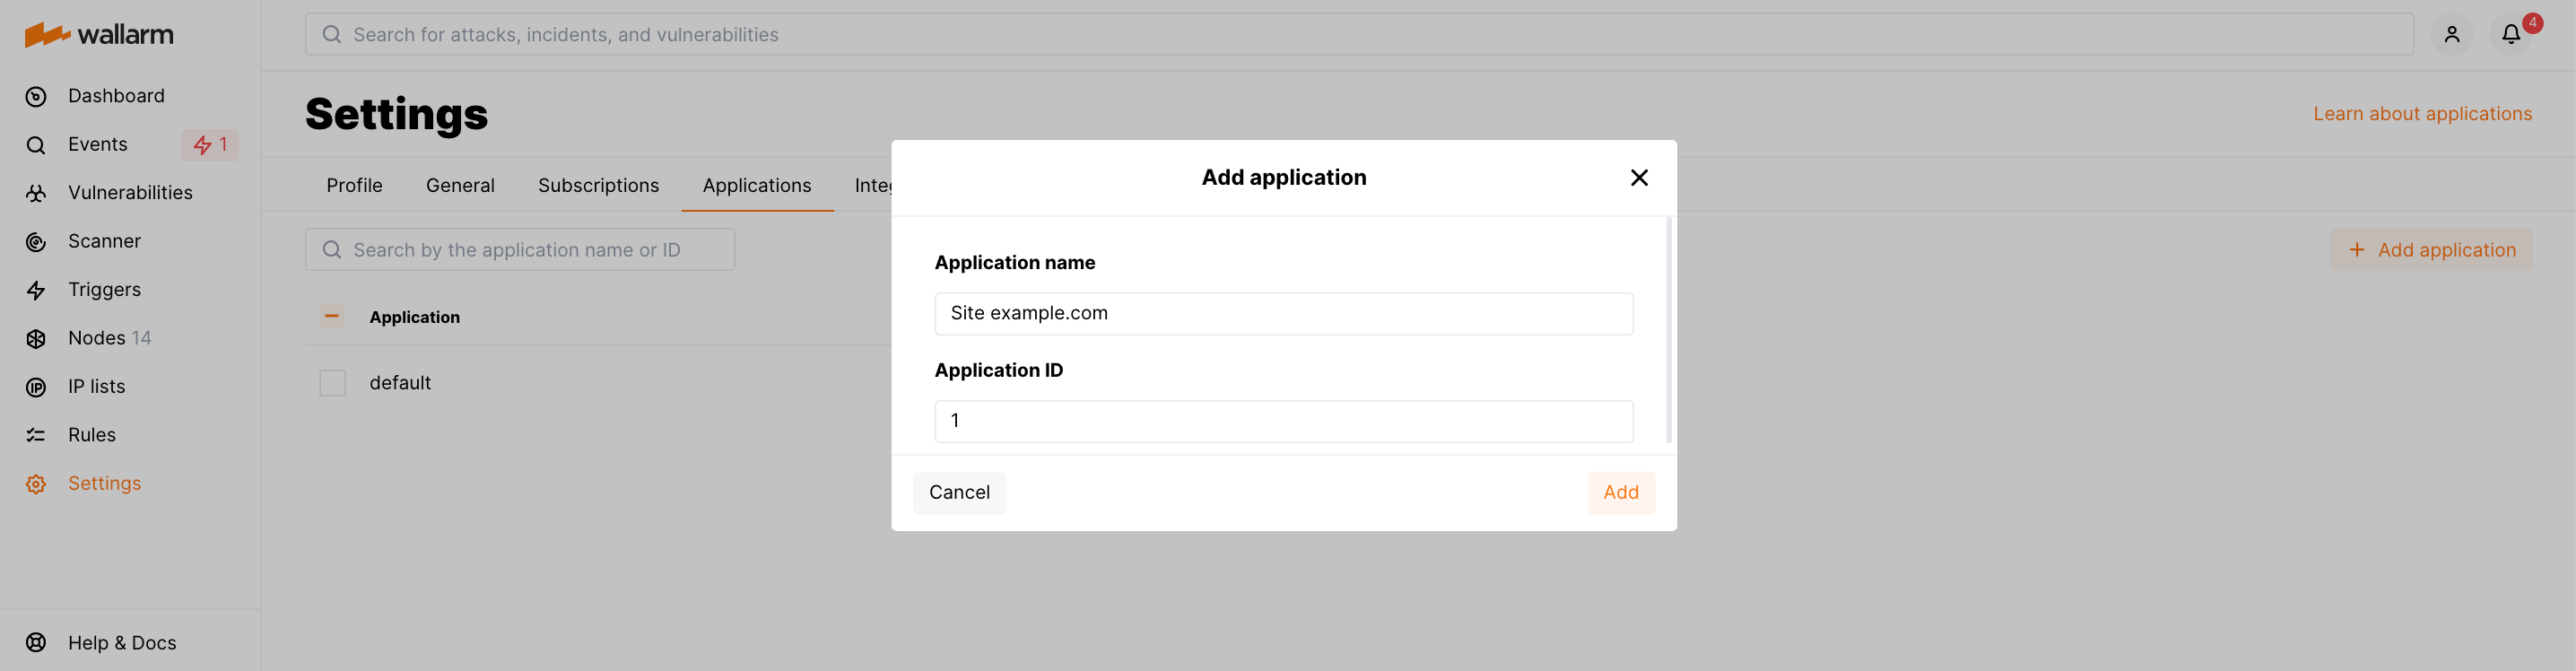 Adding an application